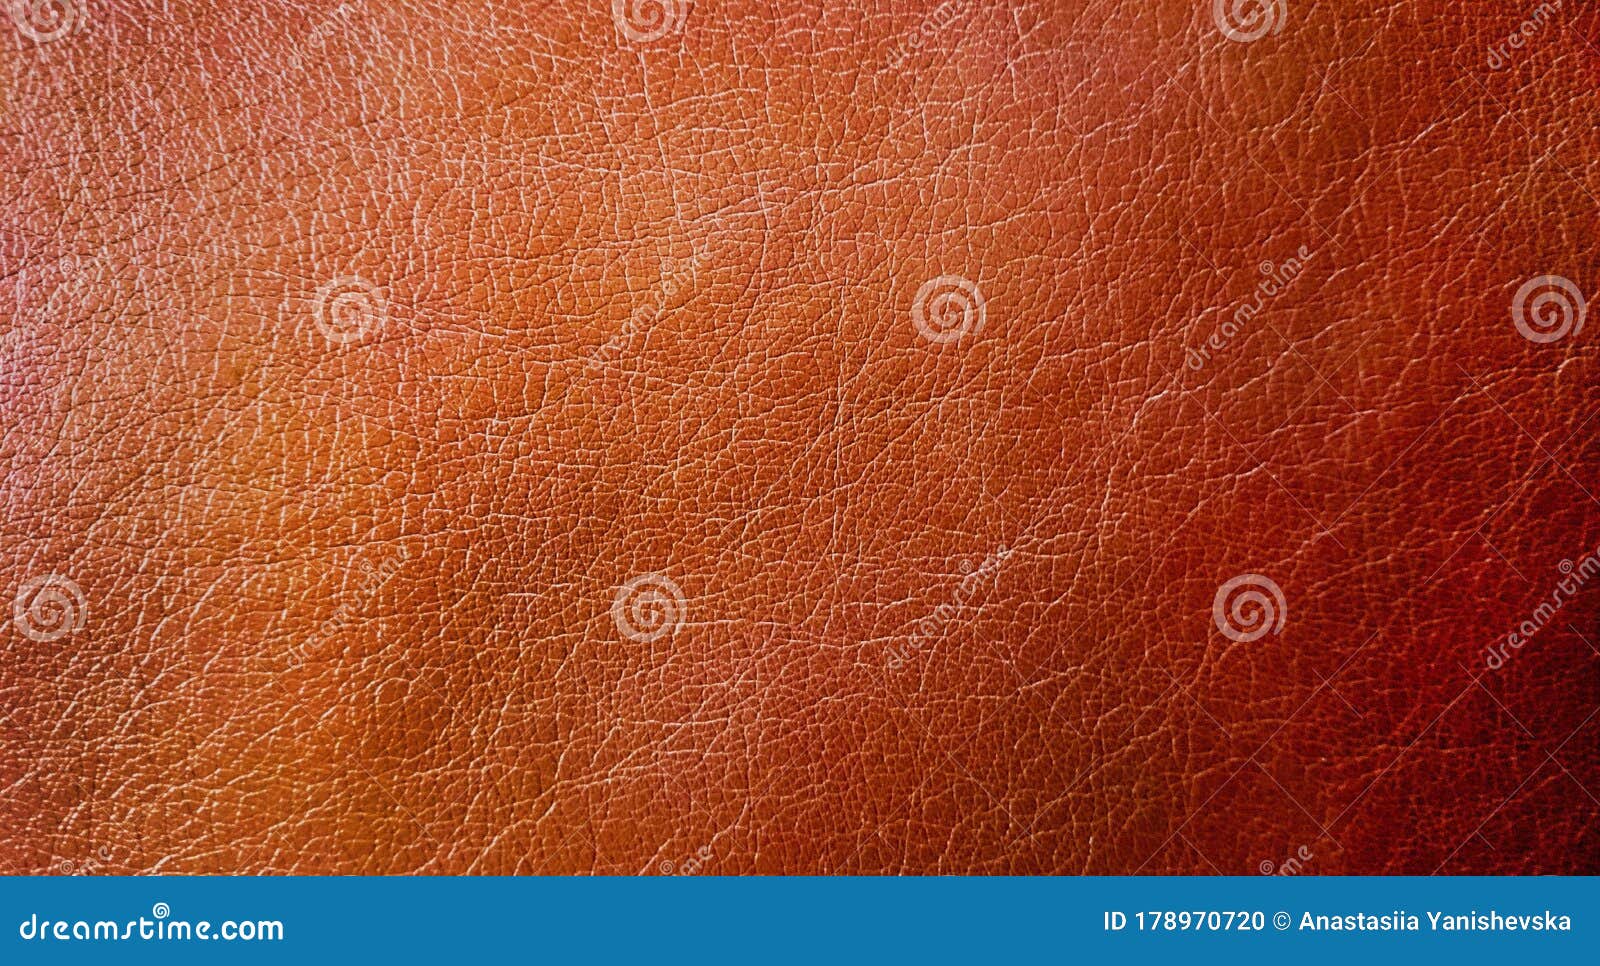 Orange Leather Texture Stock Photos Download 6768 Royalty Free Photos